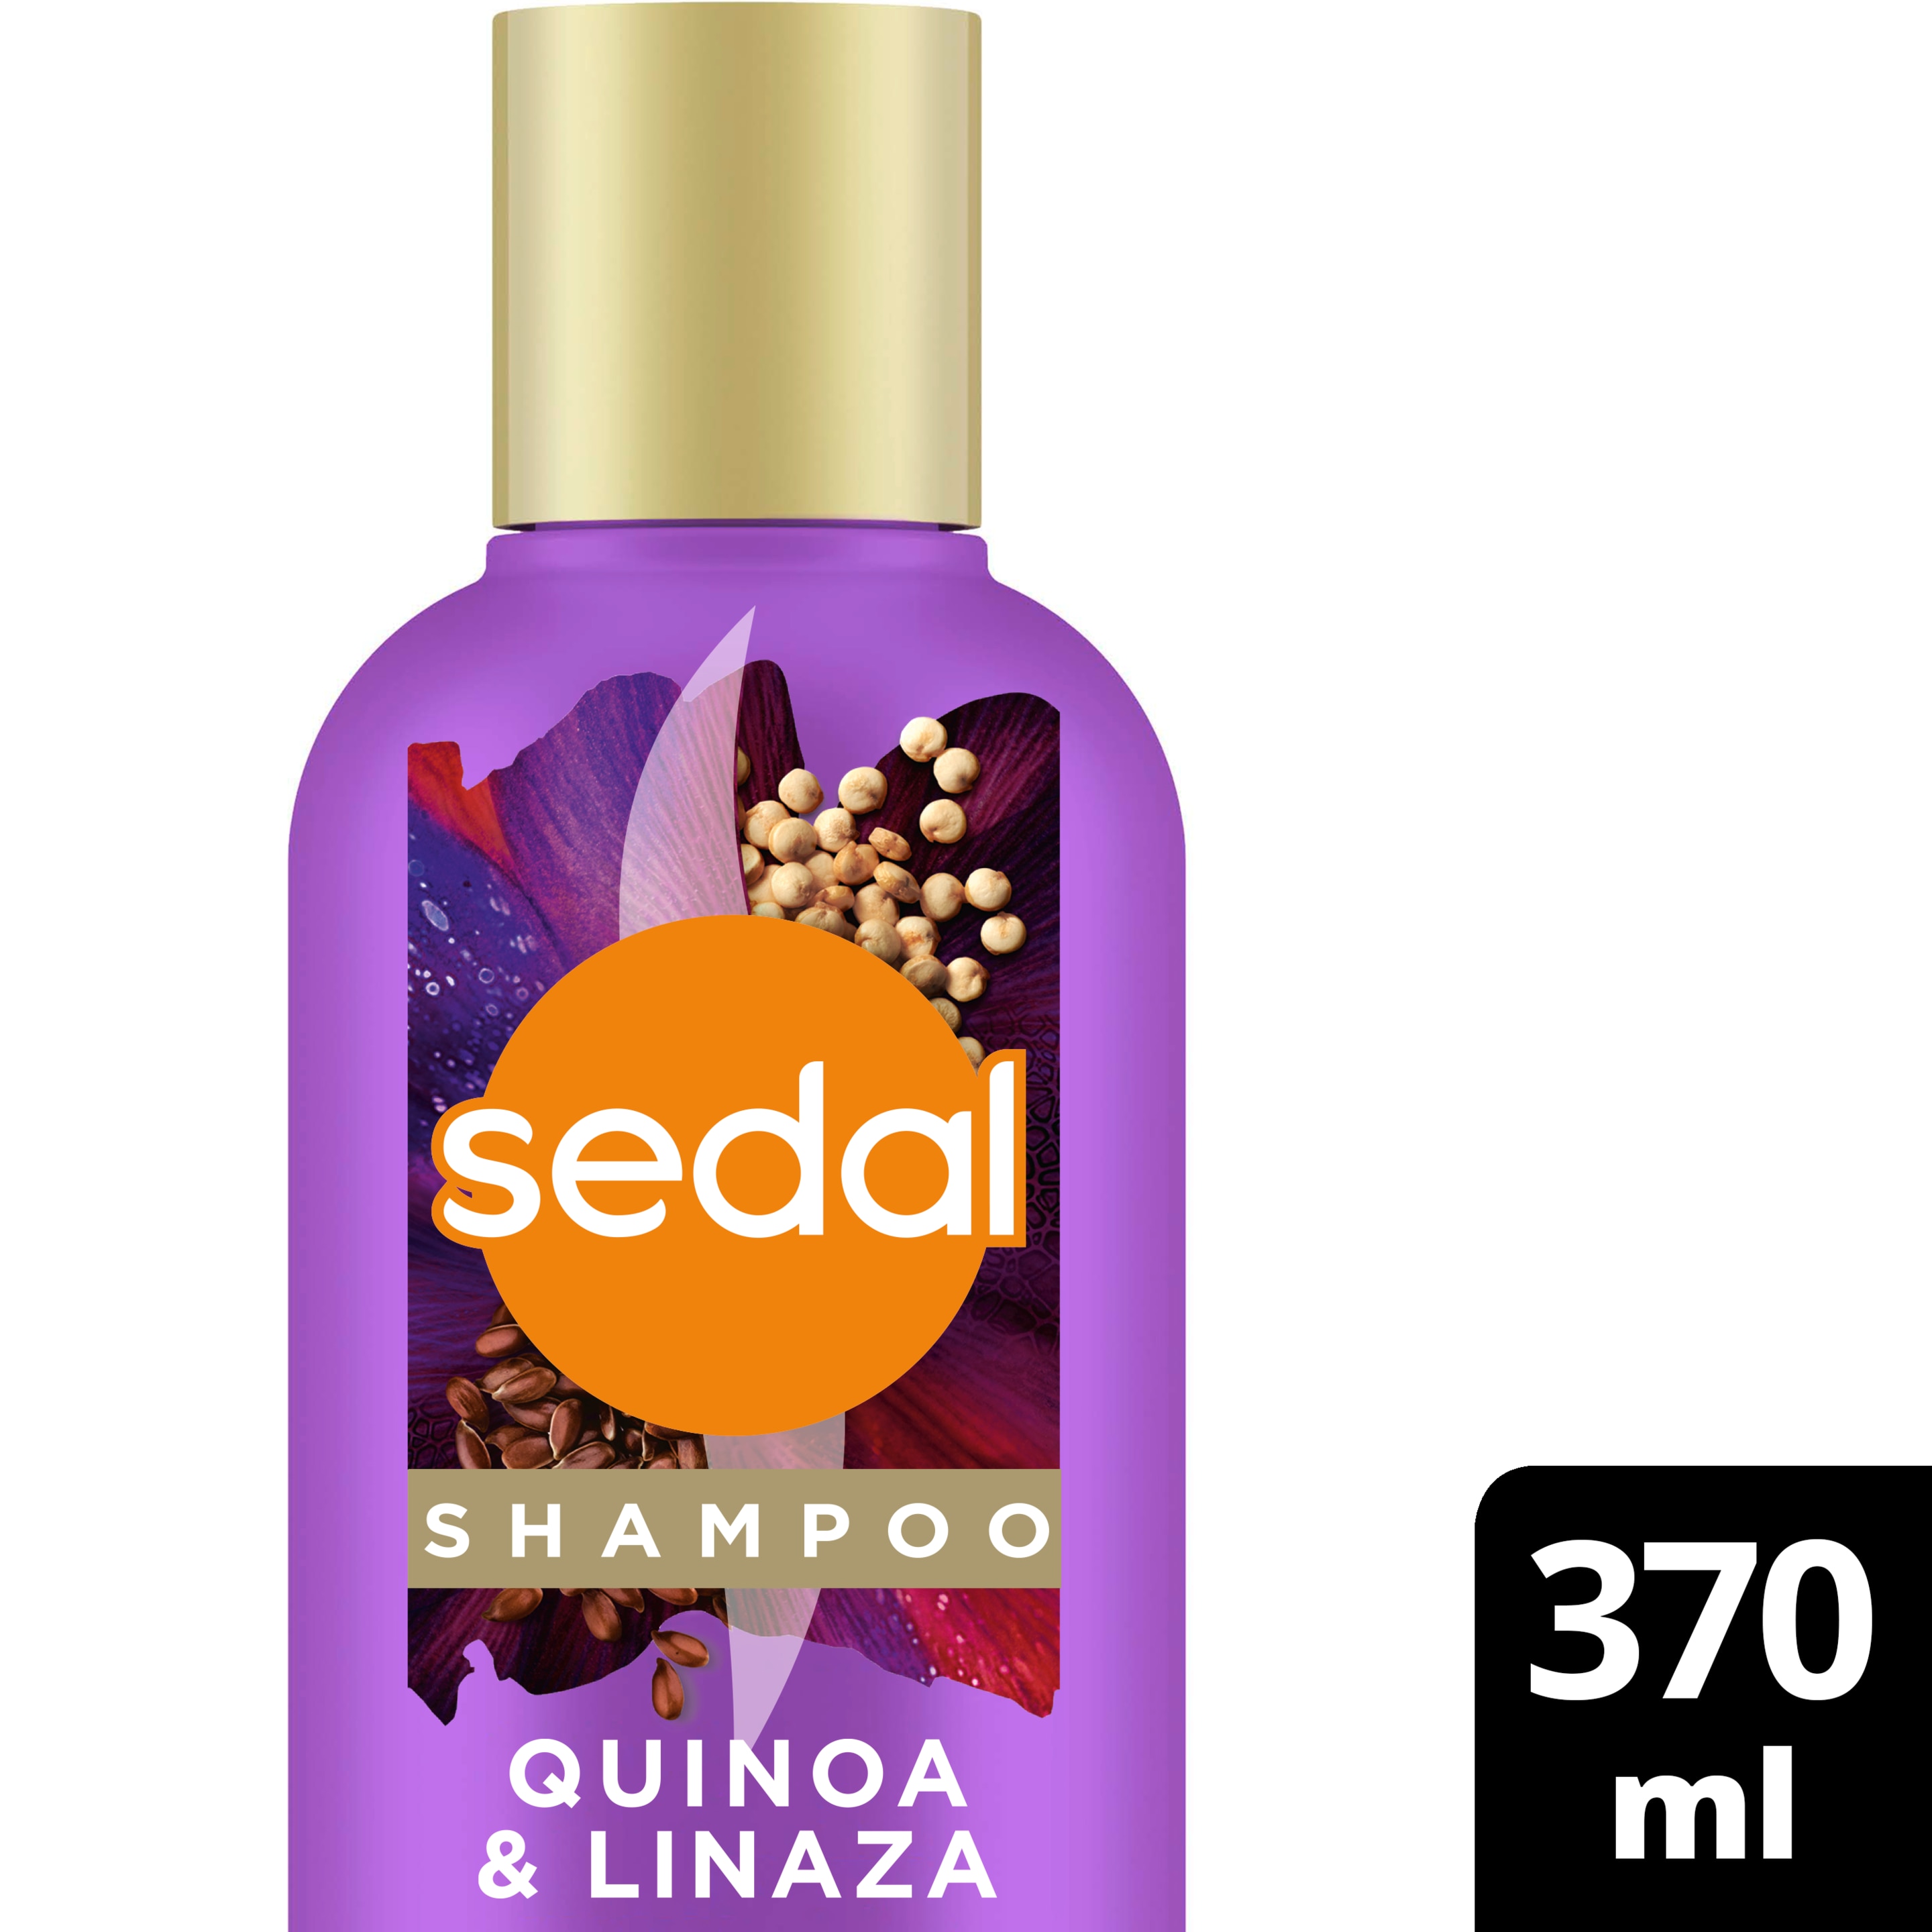 Shampoo Sedal Sin Sal Ni Parabenos Quinoa y Linaza 370 ml